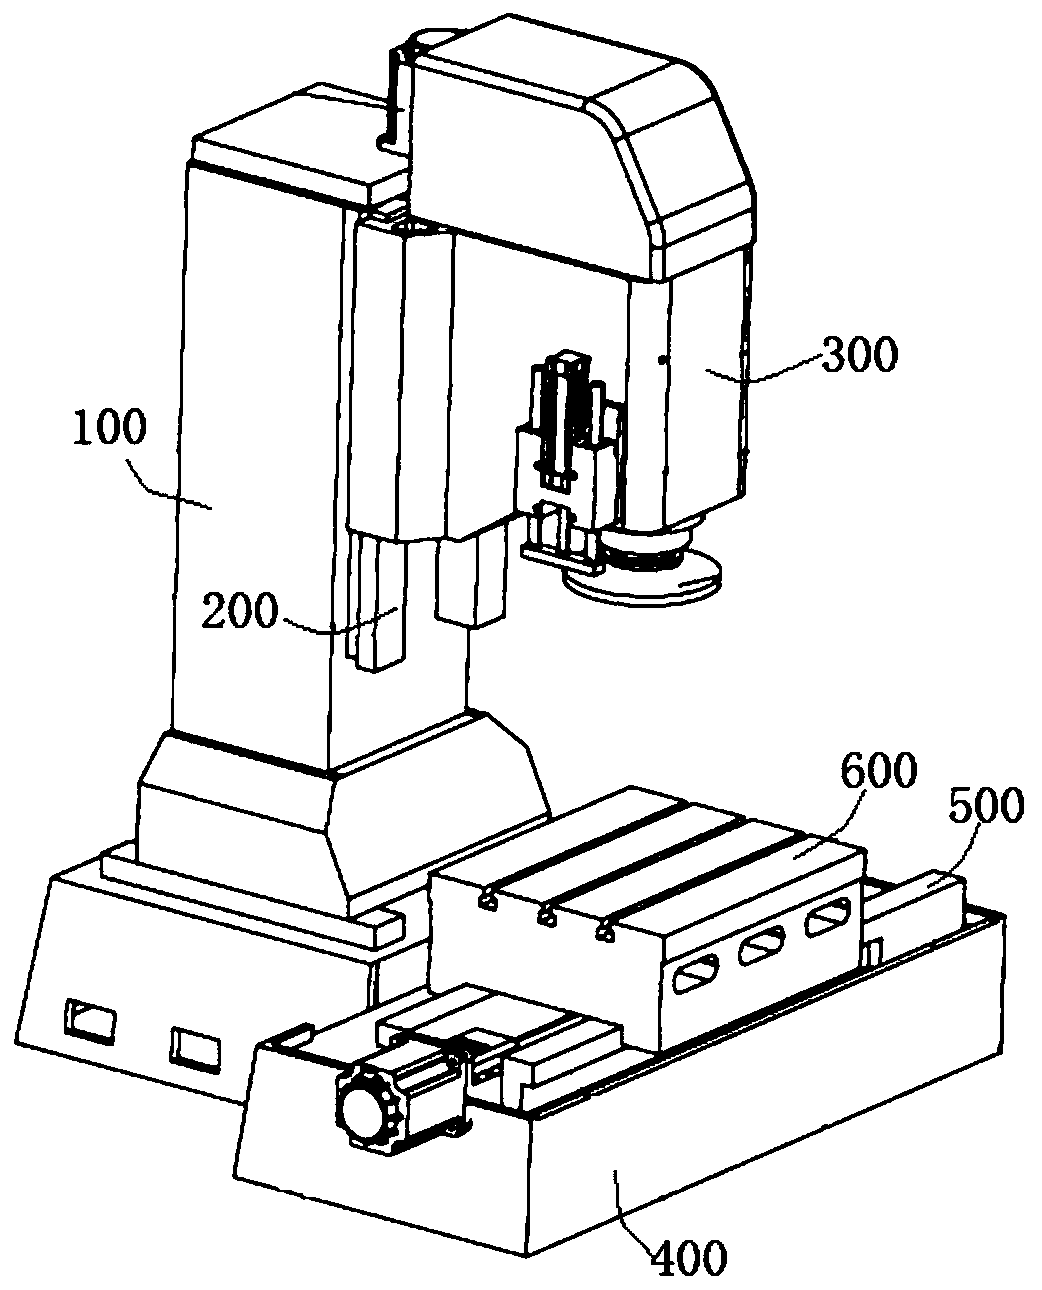 A milling machine sliding platform for placing workpieces